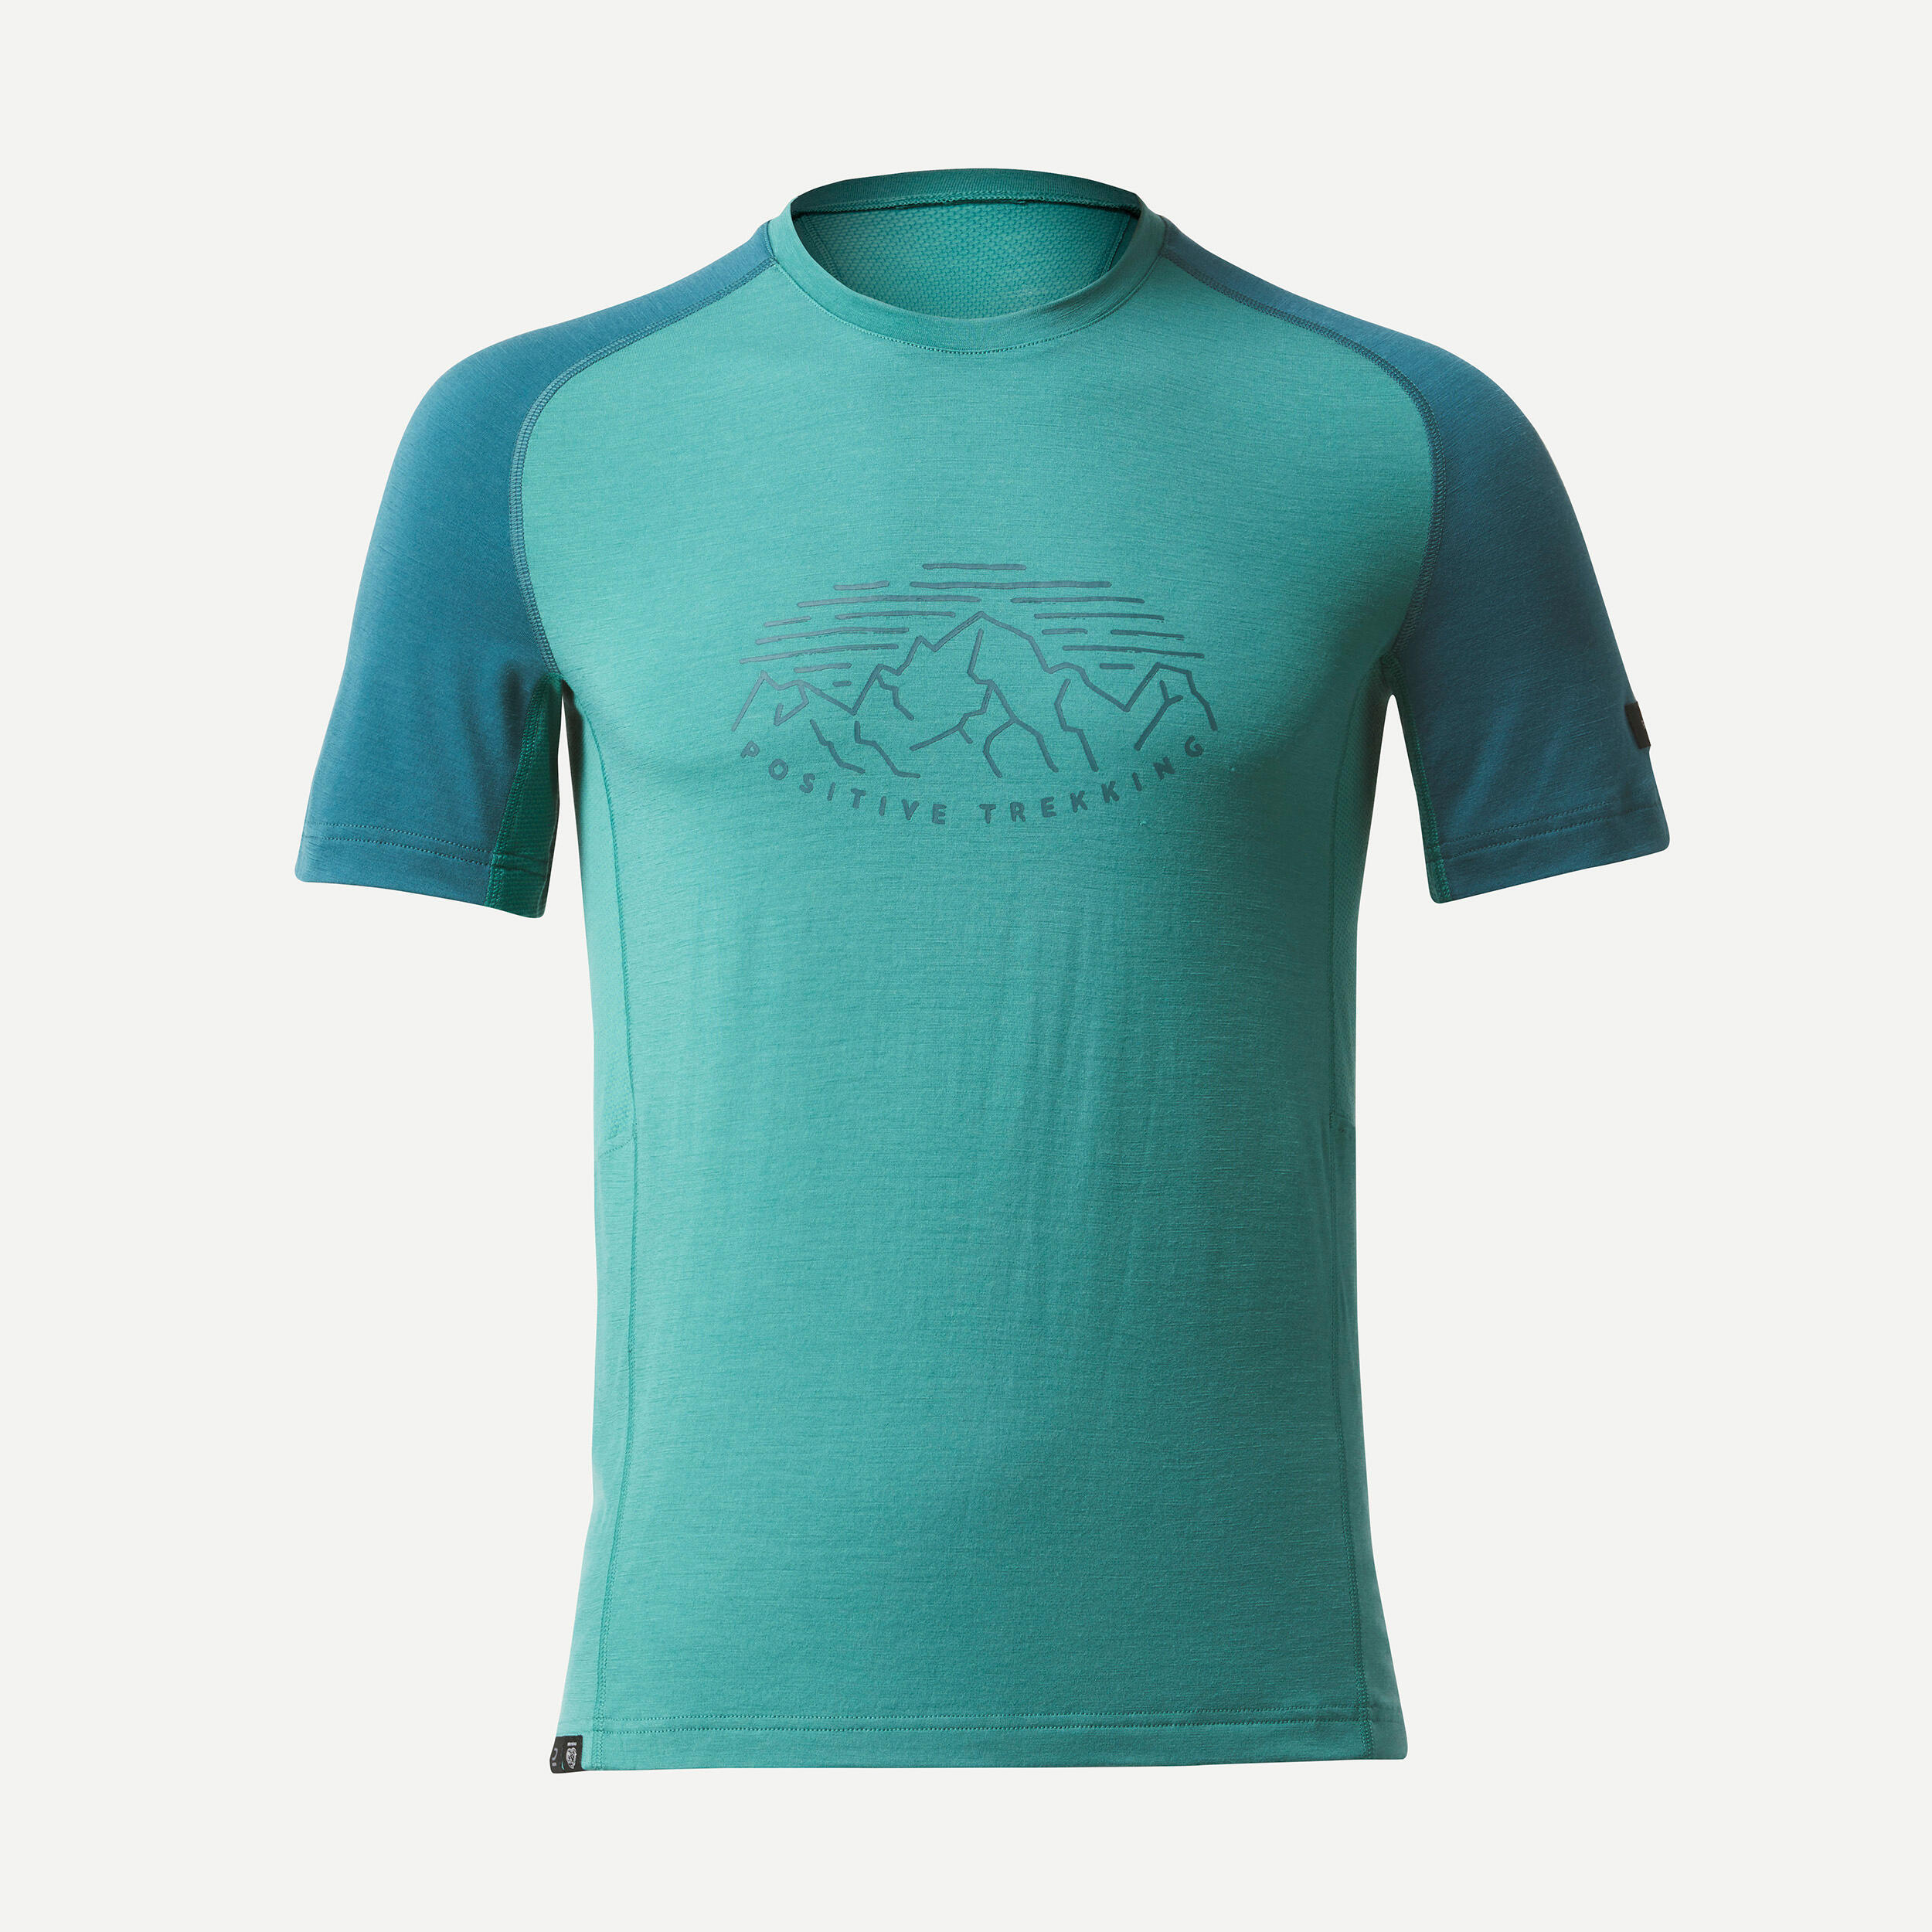 Men's Short-sleeved Merino Wool Trekking T-shirt  - MT500 5/6